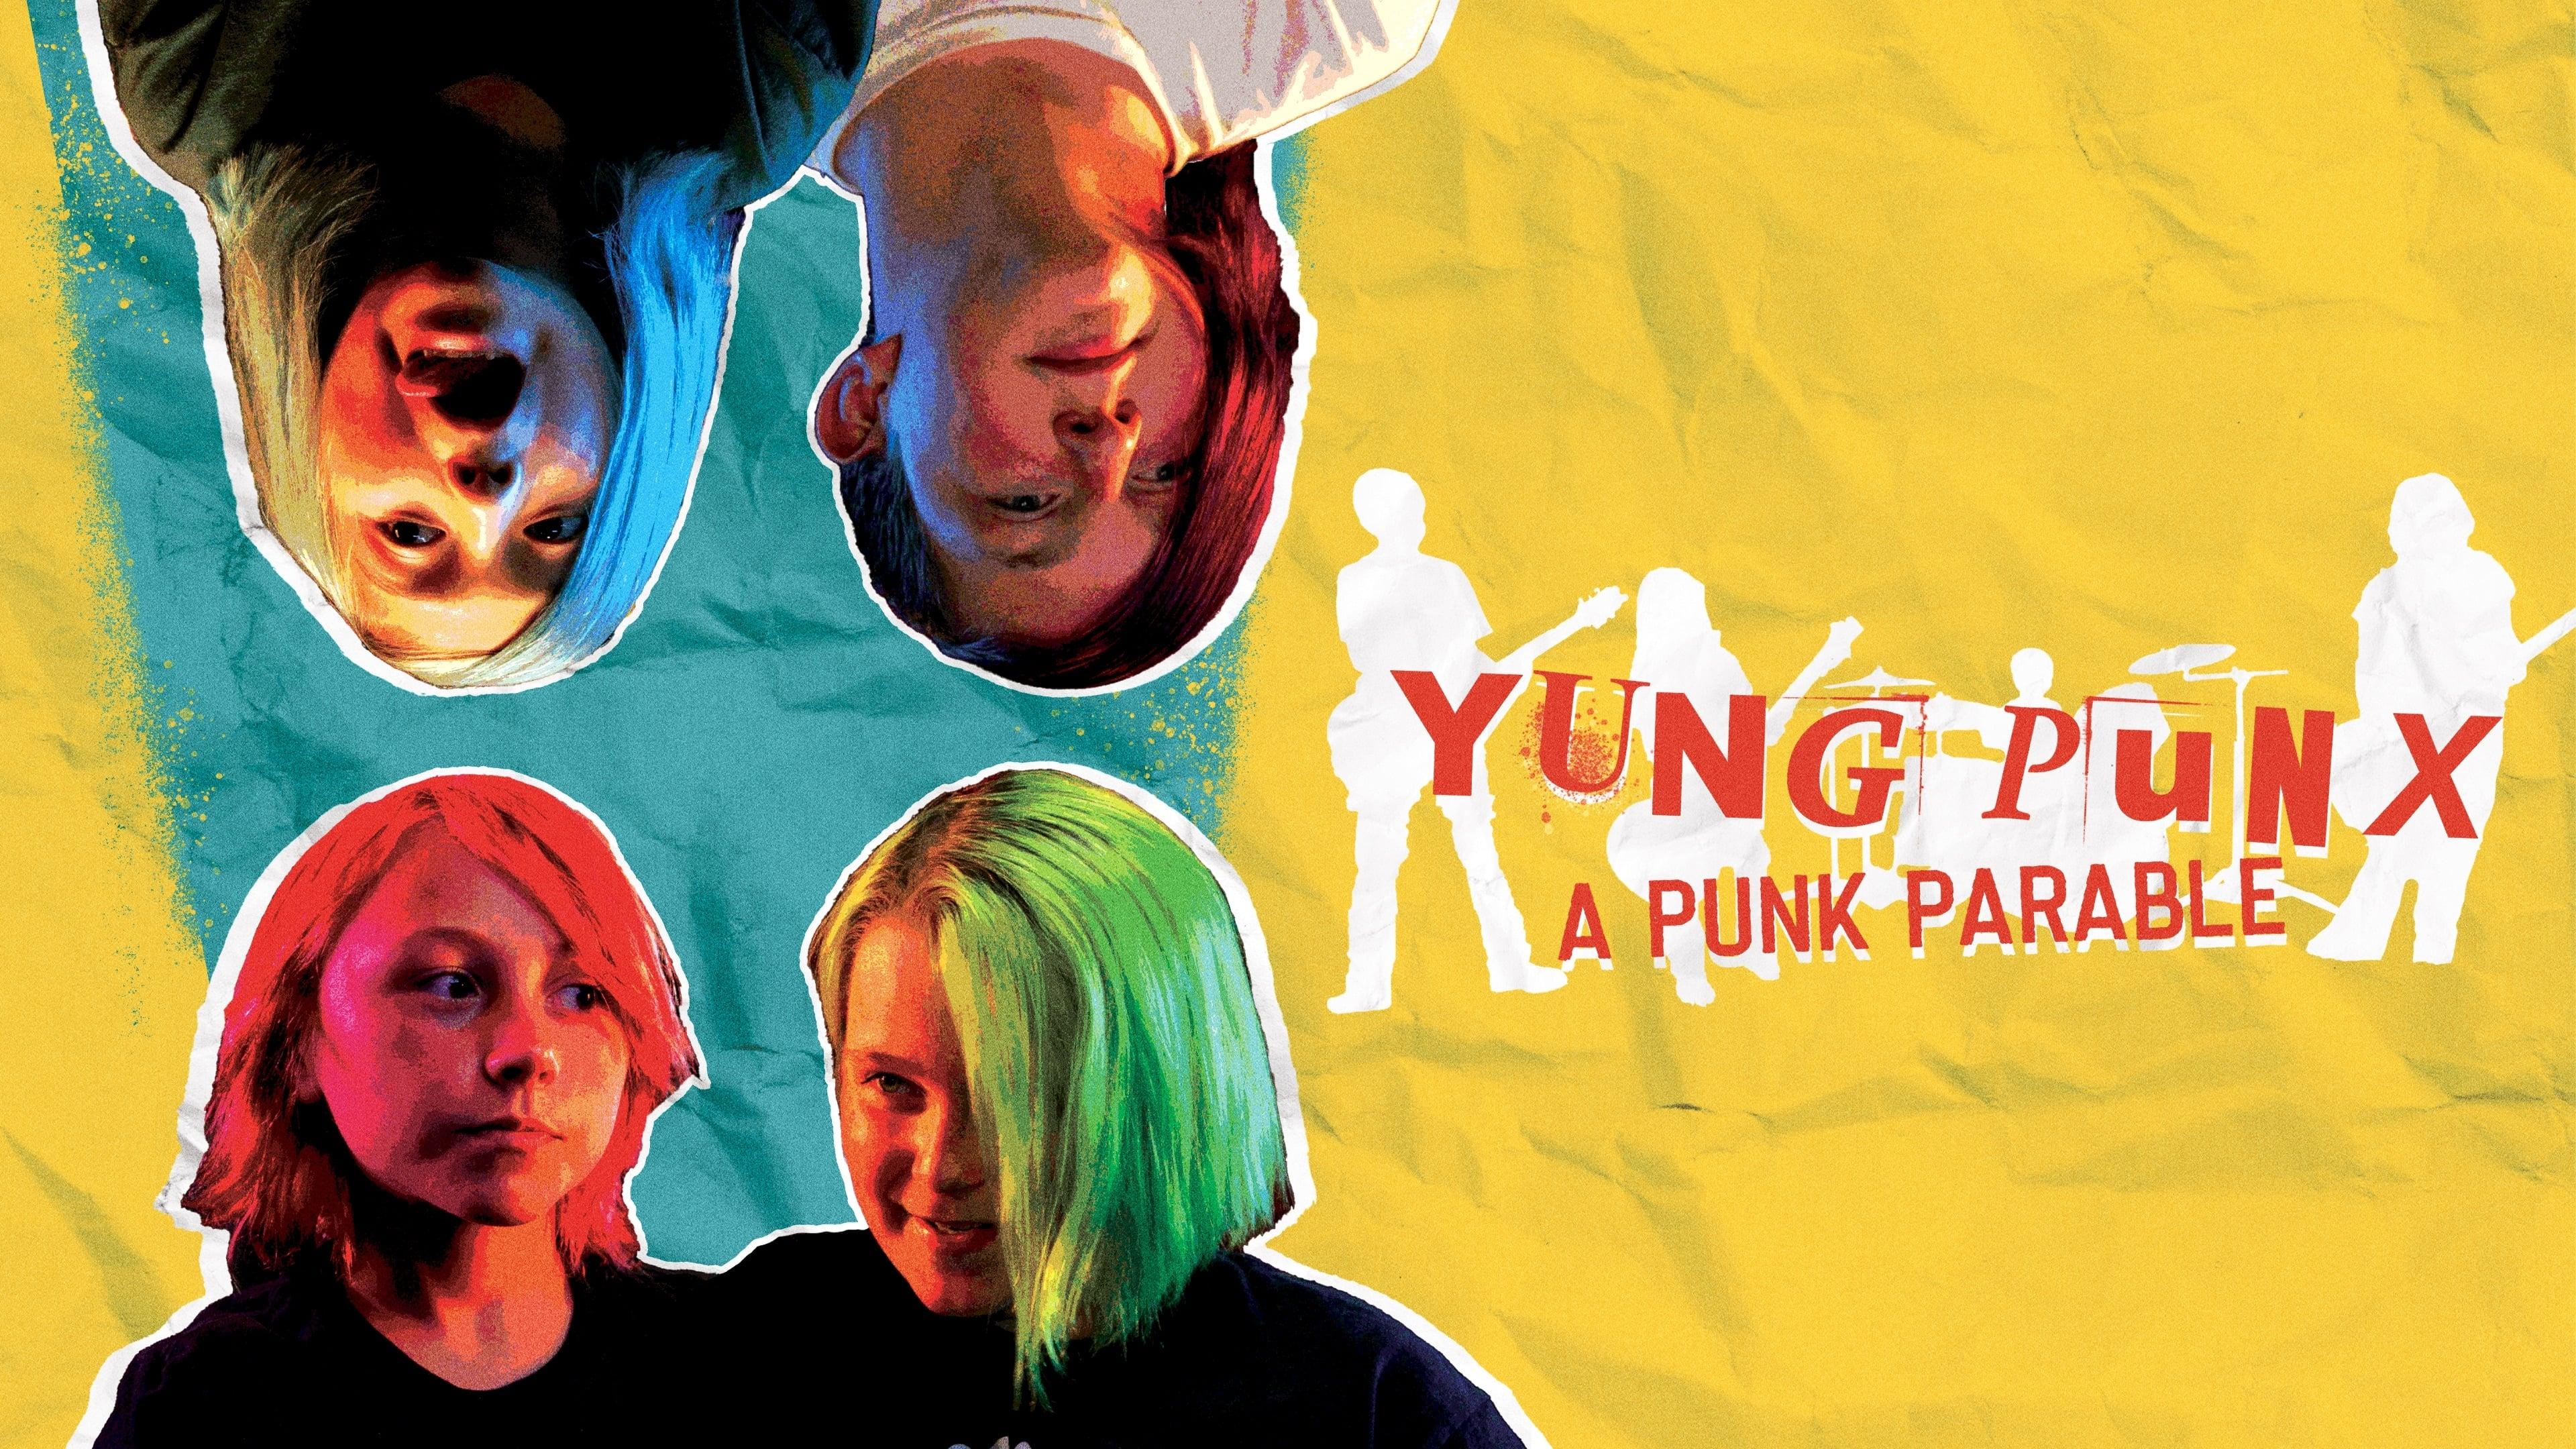 Yung Punx: A Punk Parable backdrop